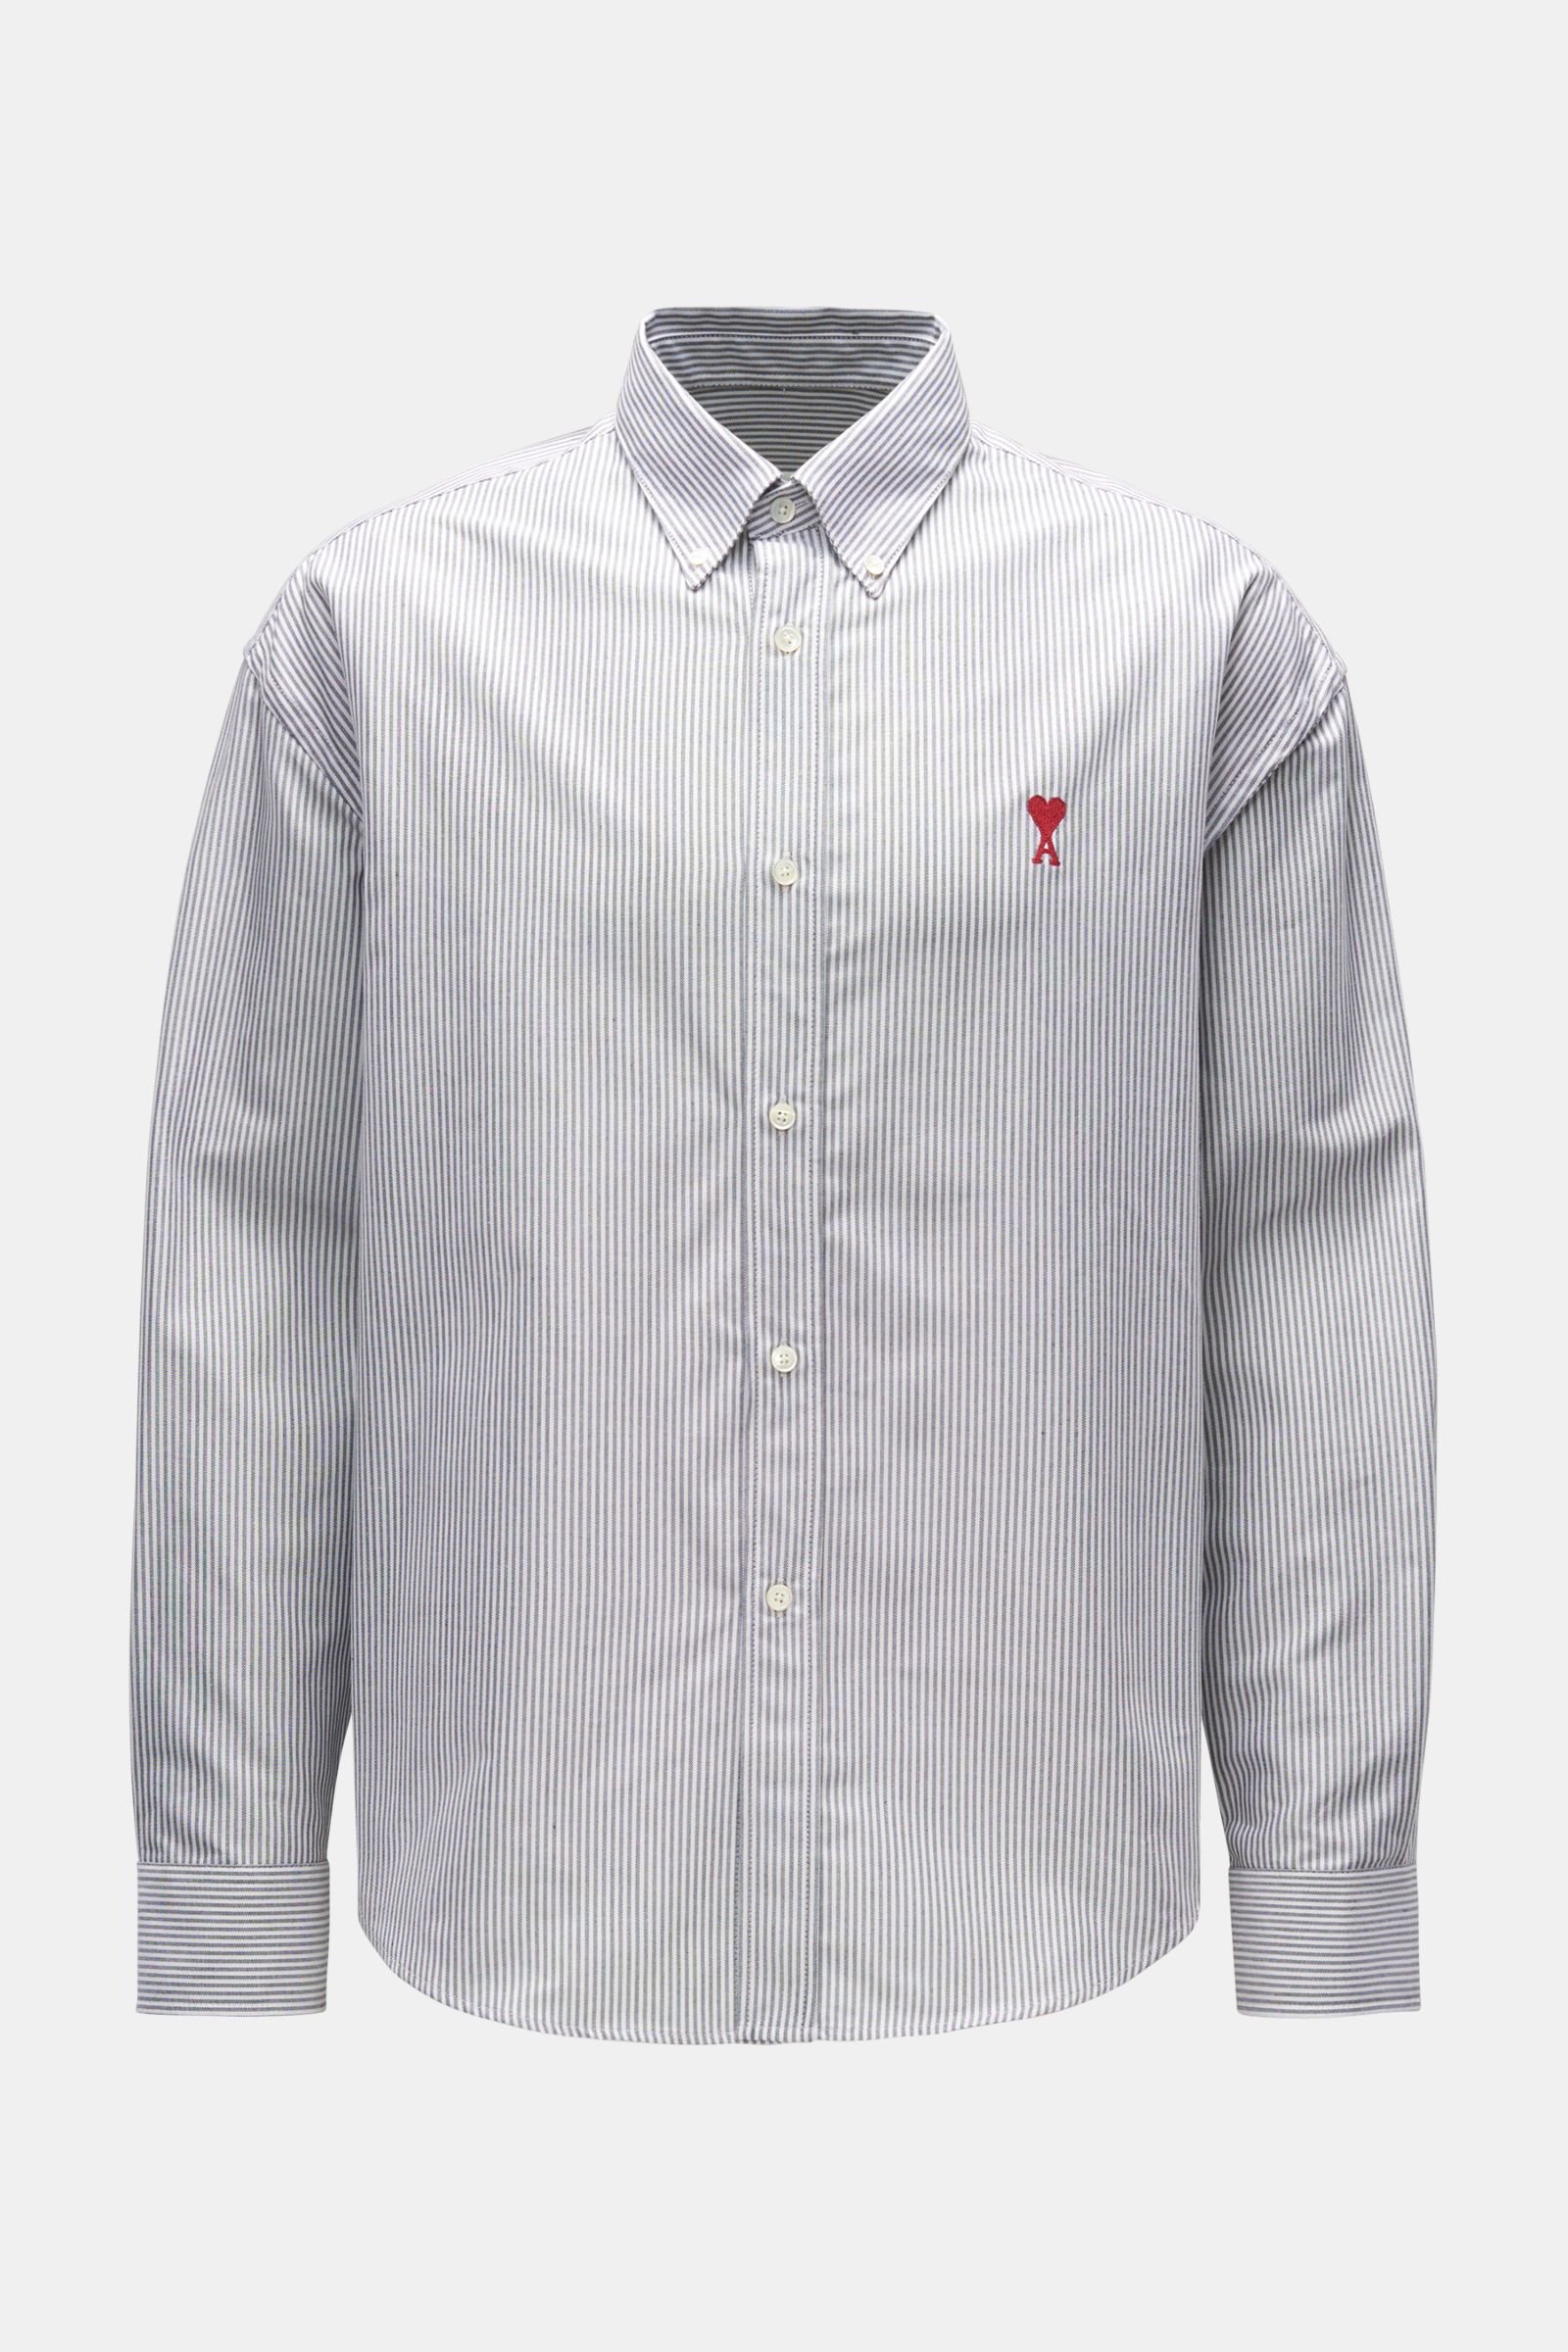 Oxford shirt button-down collar anthracite/white striped